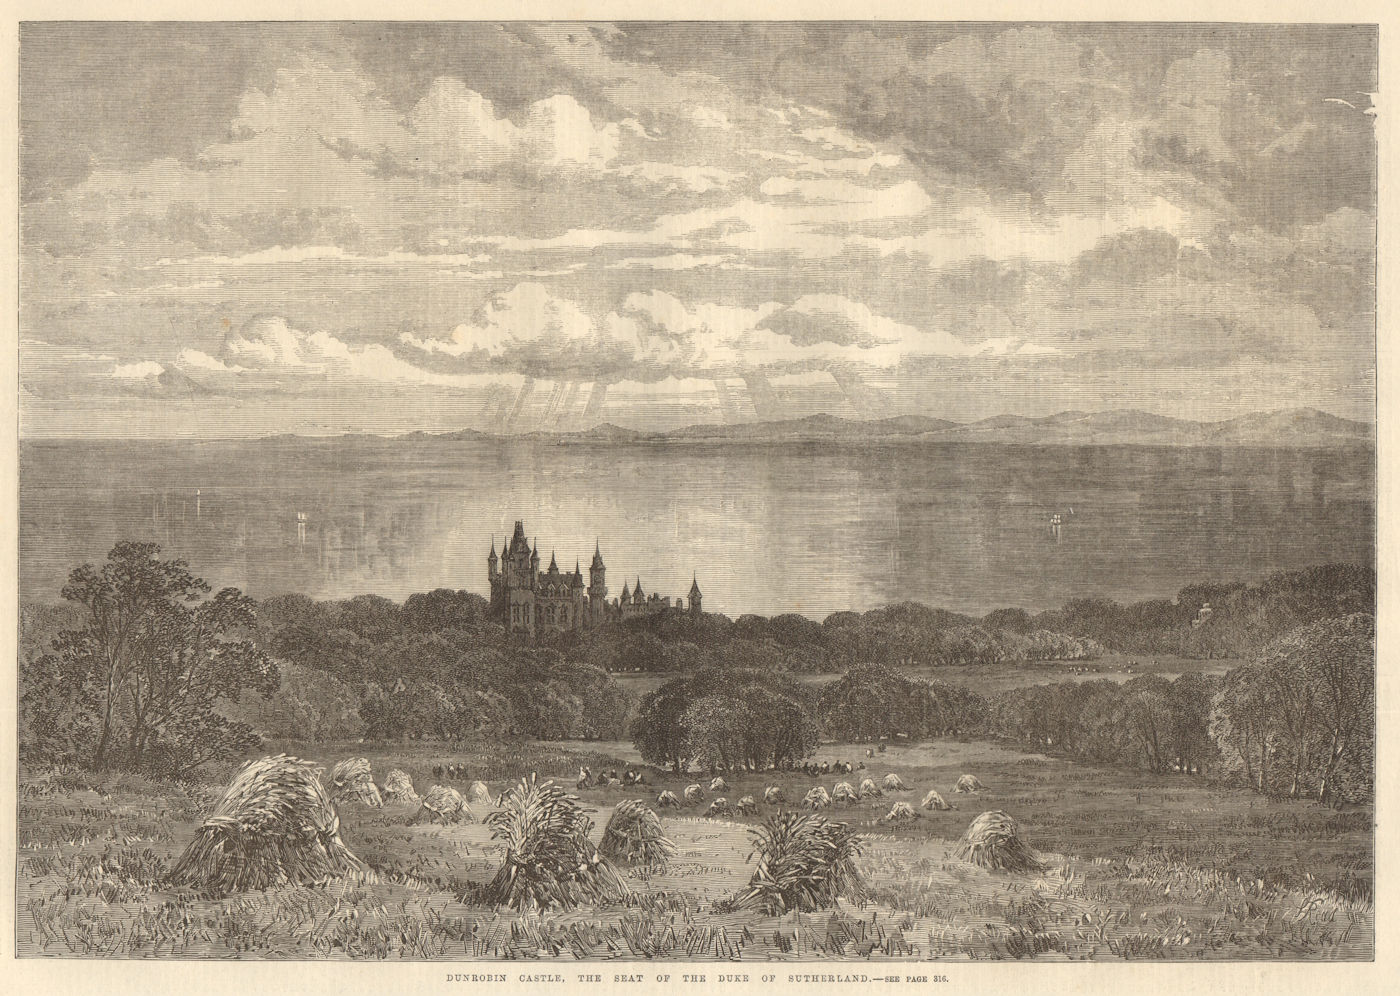 Dunrobin Castle, the seat of the Duke of Sutherland. Scotland 1866 ILN print